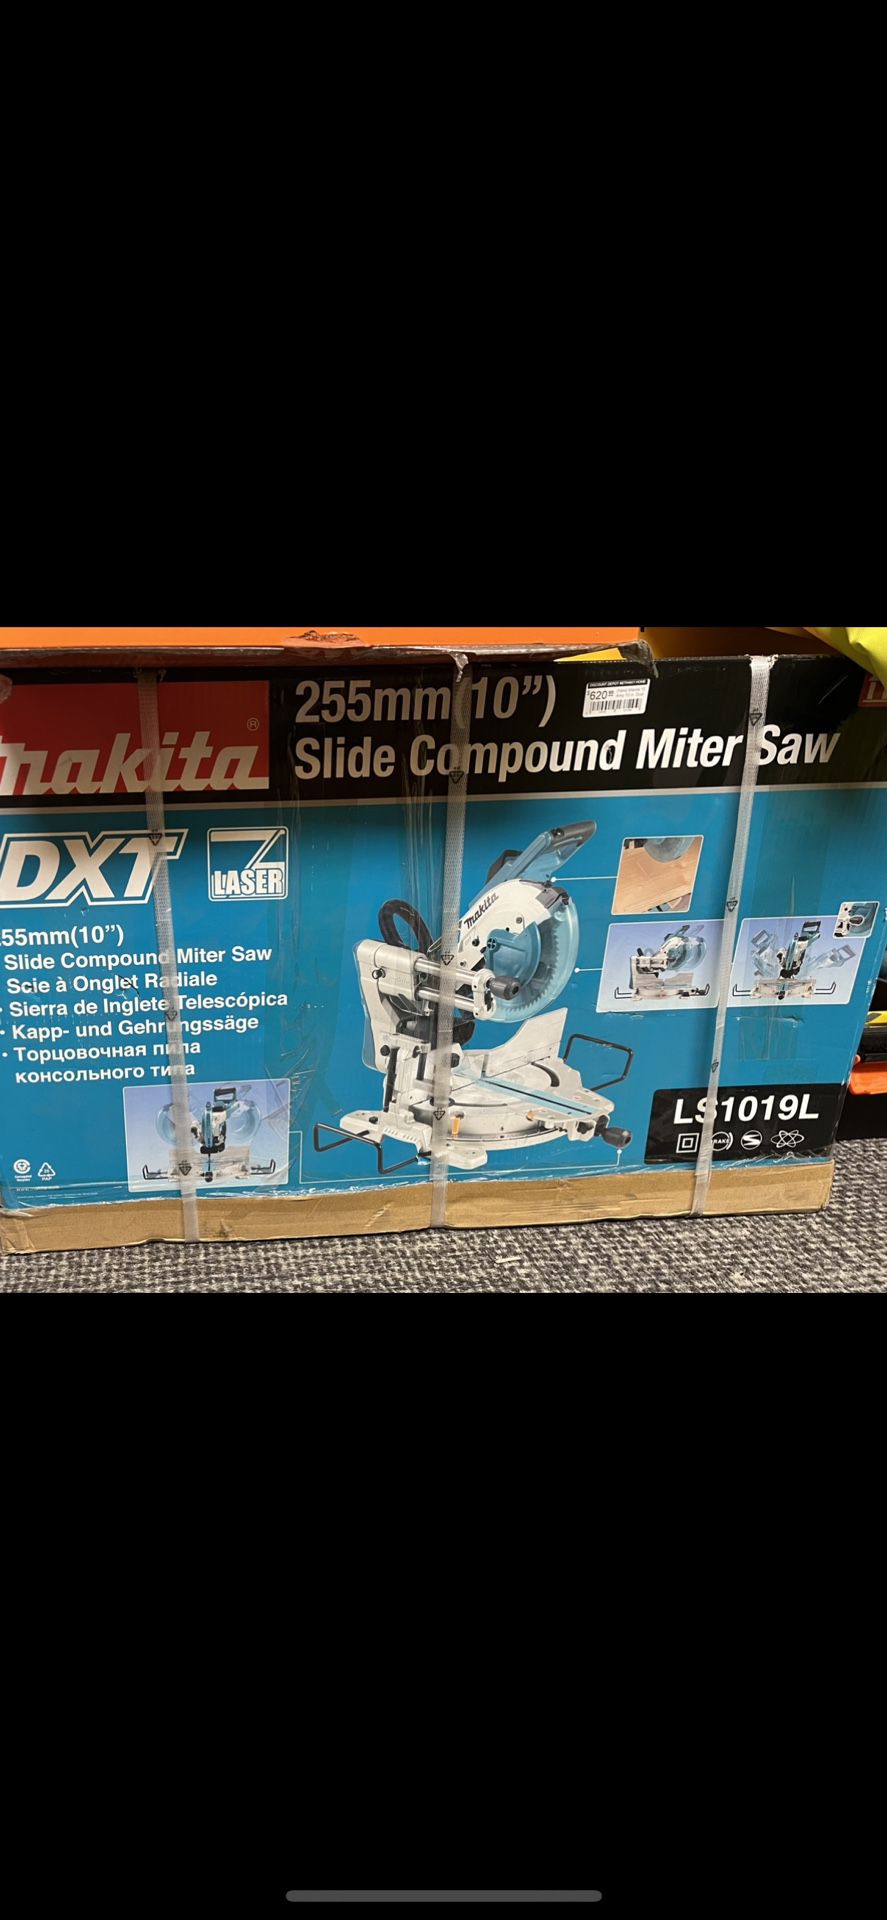 Makita 255mm (10") Slide Compound Miter Saw (new)